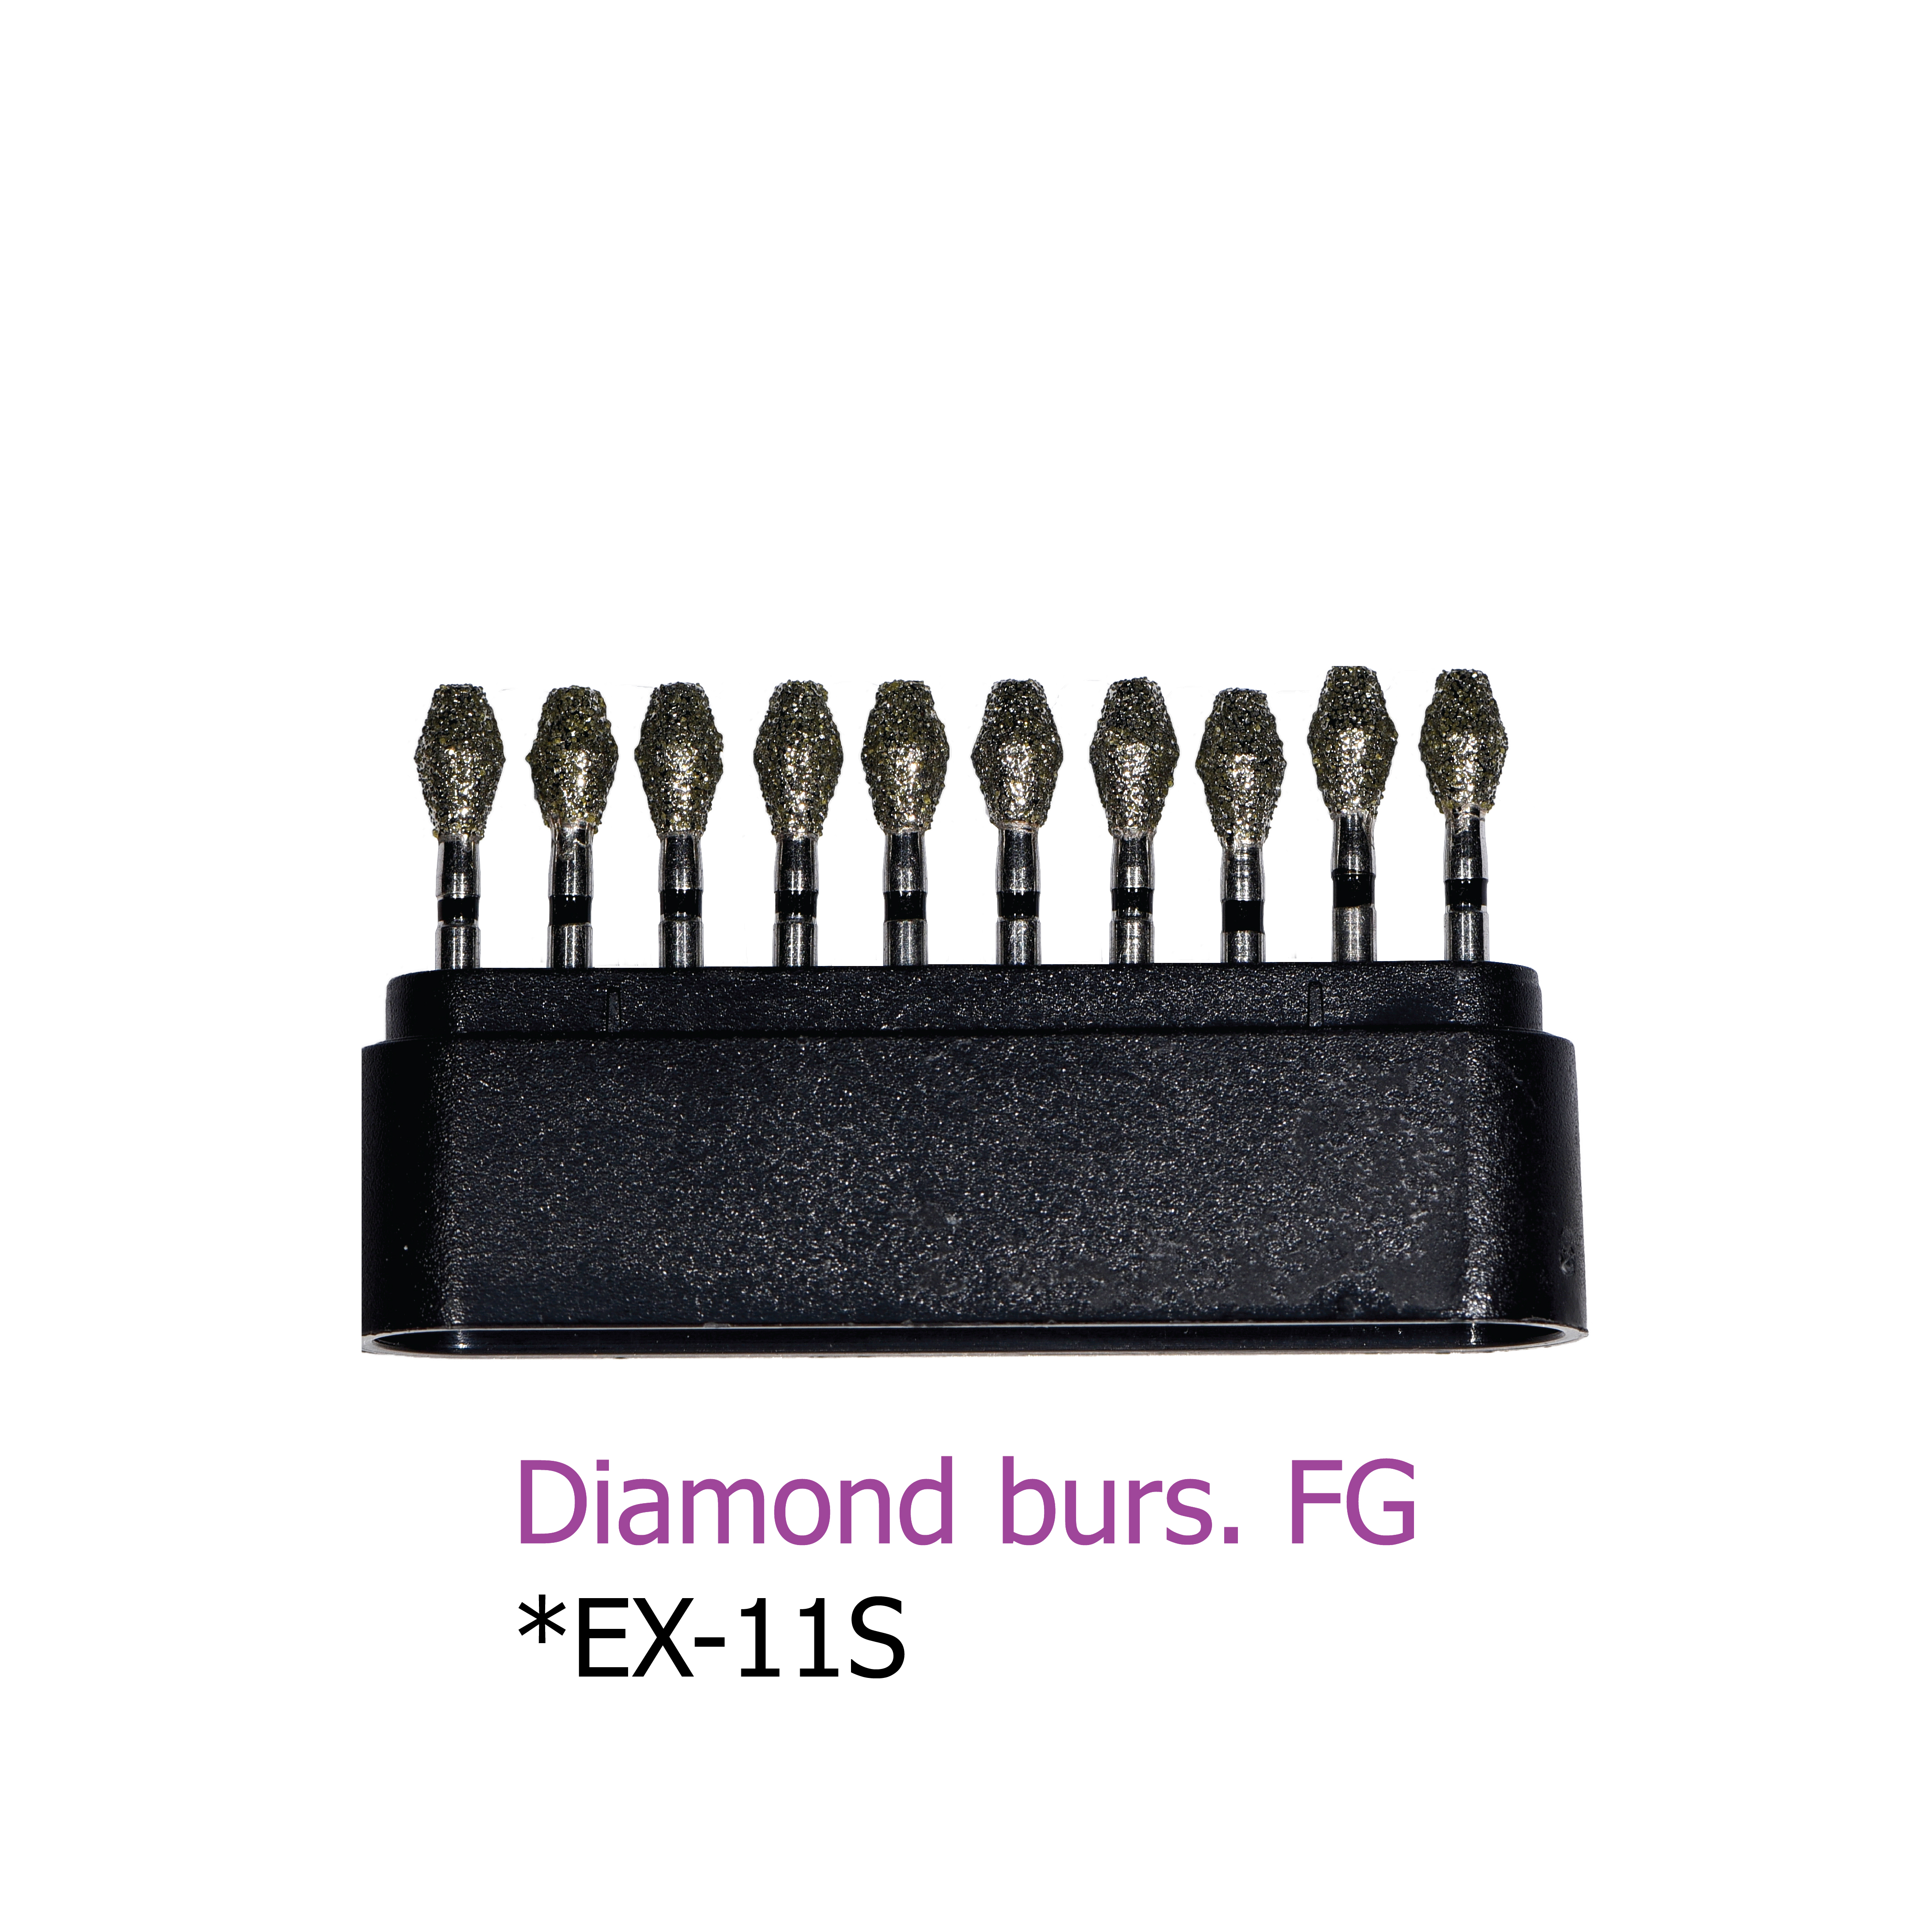 Diamond burs. FG *EX-11S